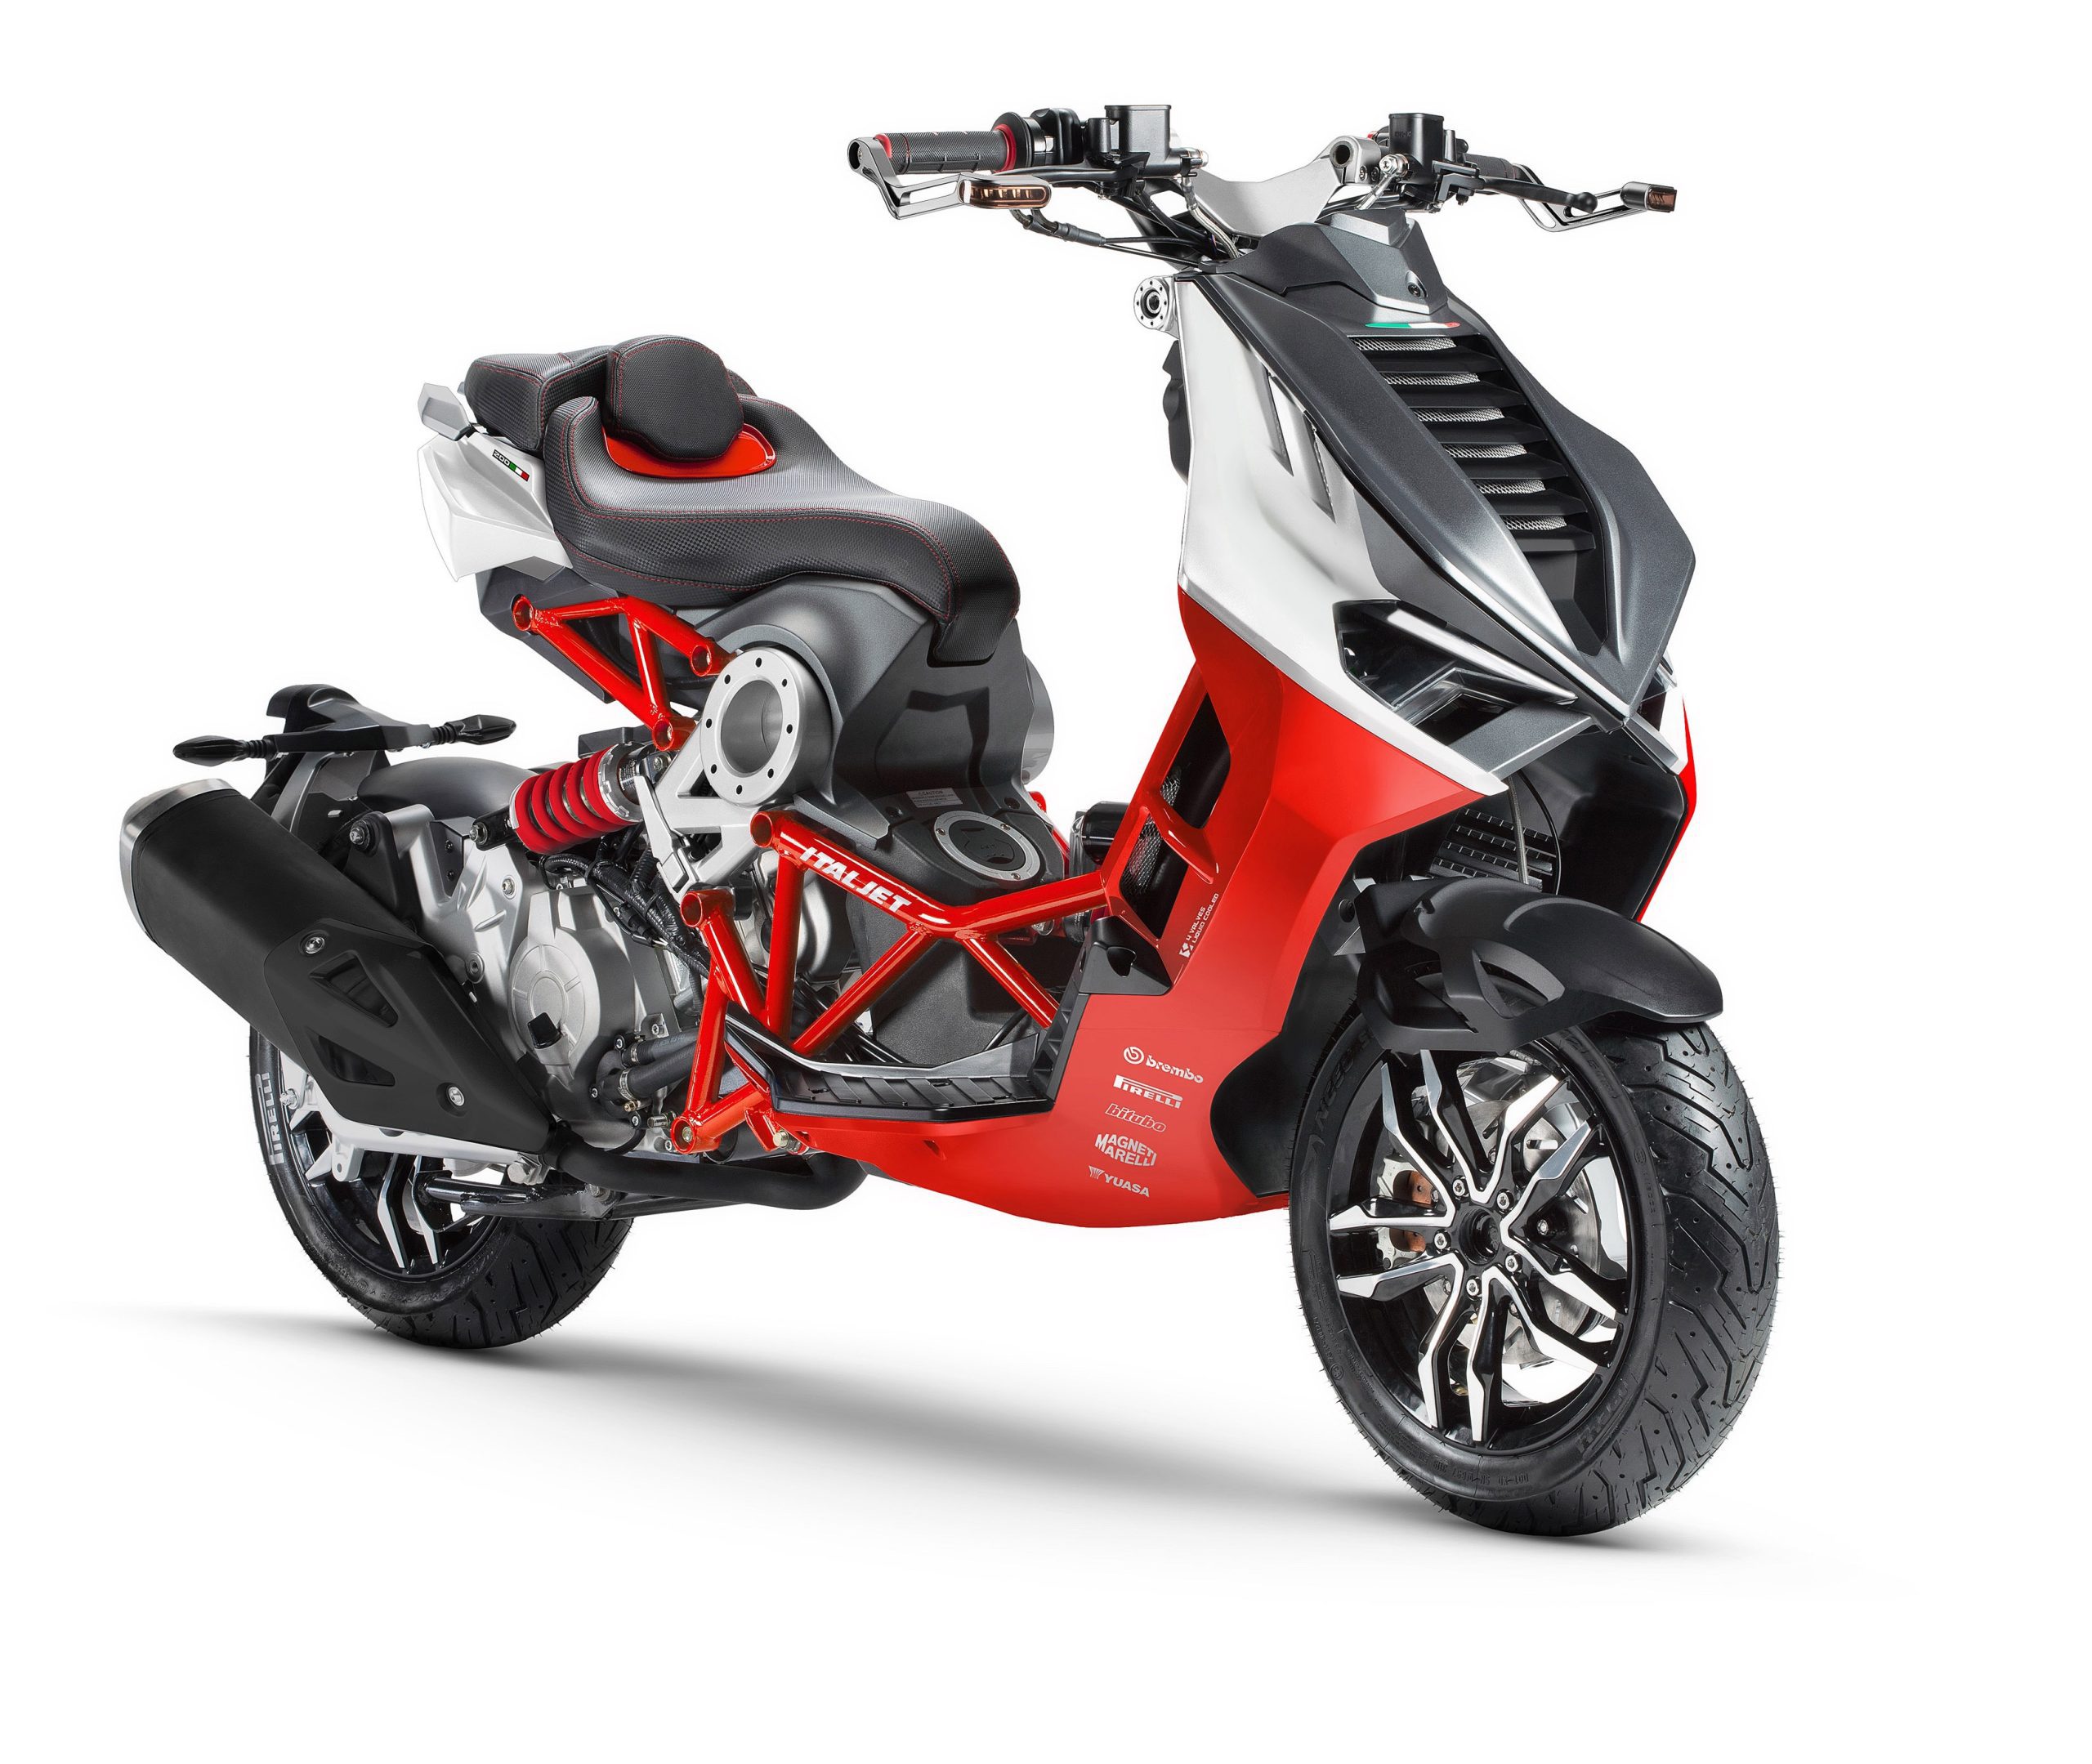 Italjet scooter Ducati - webBikeWorld design has